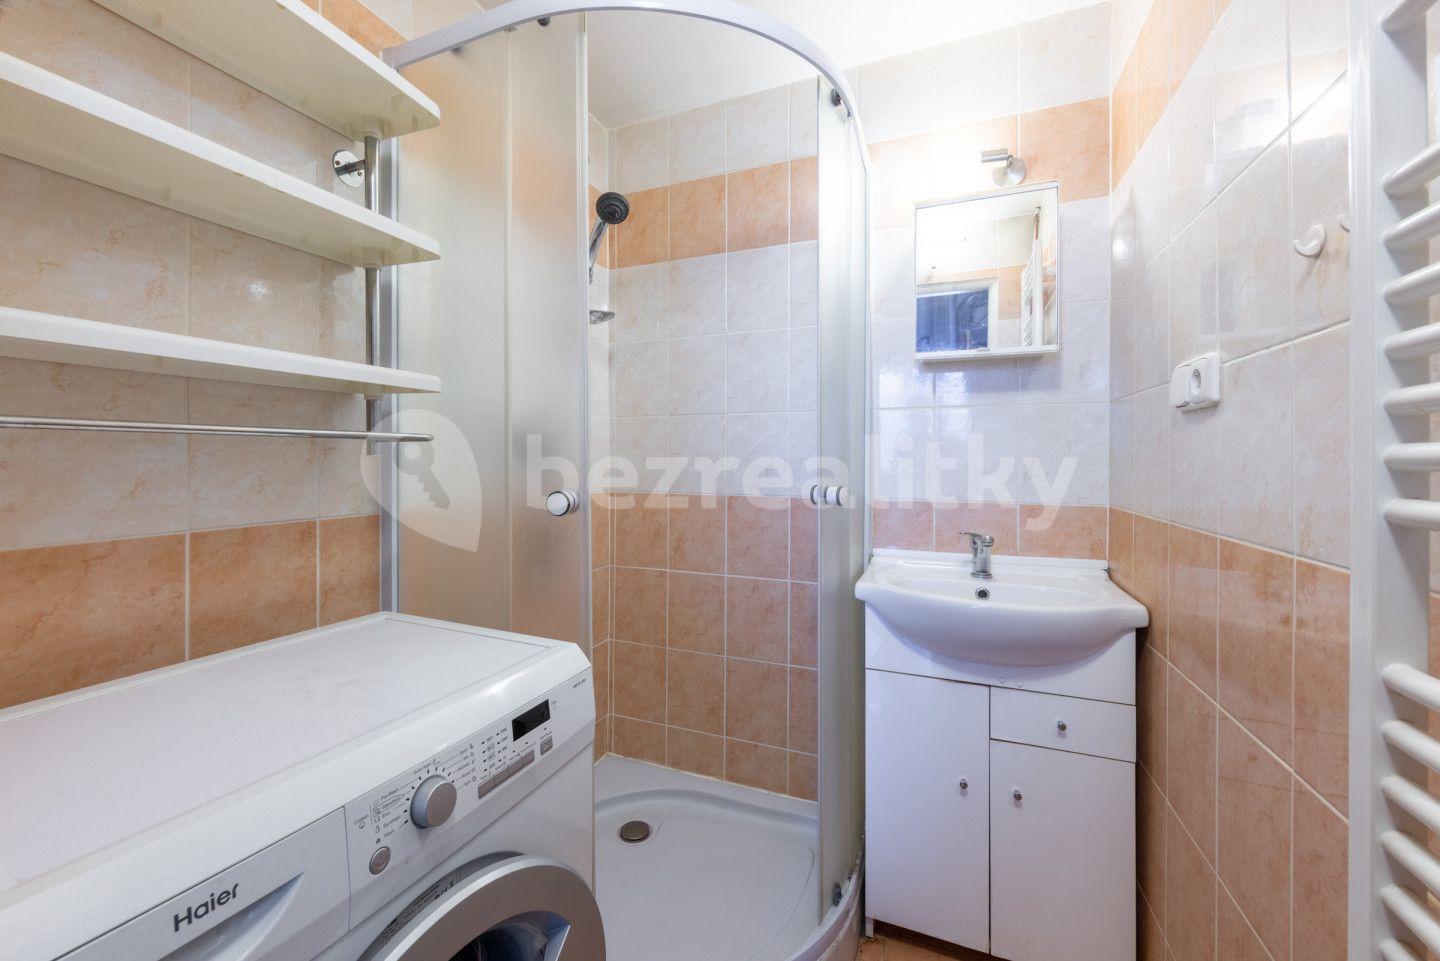 3 bedroom flat for sale, 74 m², U Hačky, Chomutov, Ústecký Region